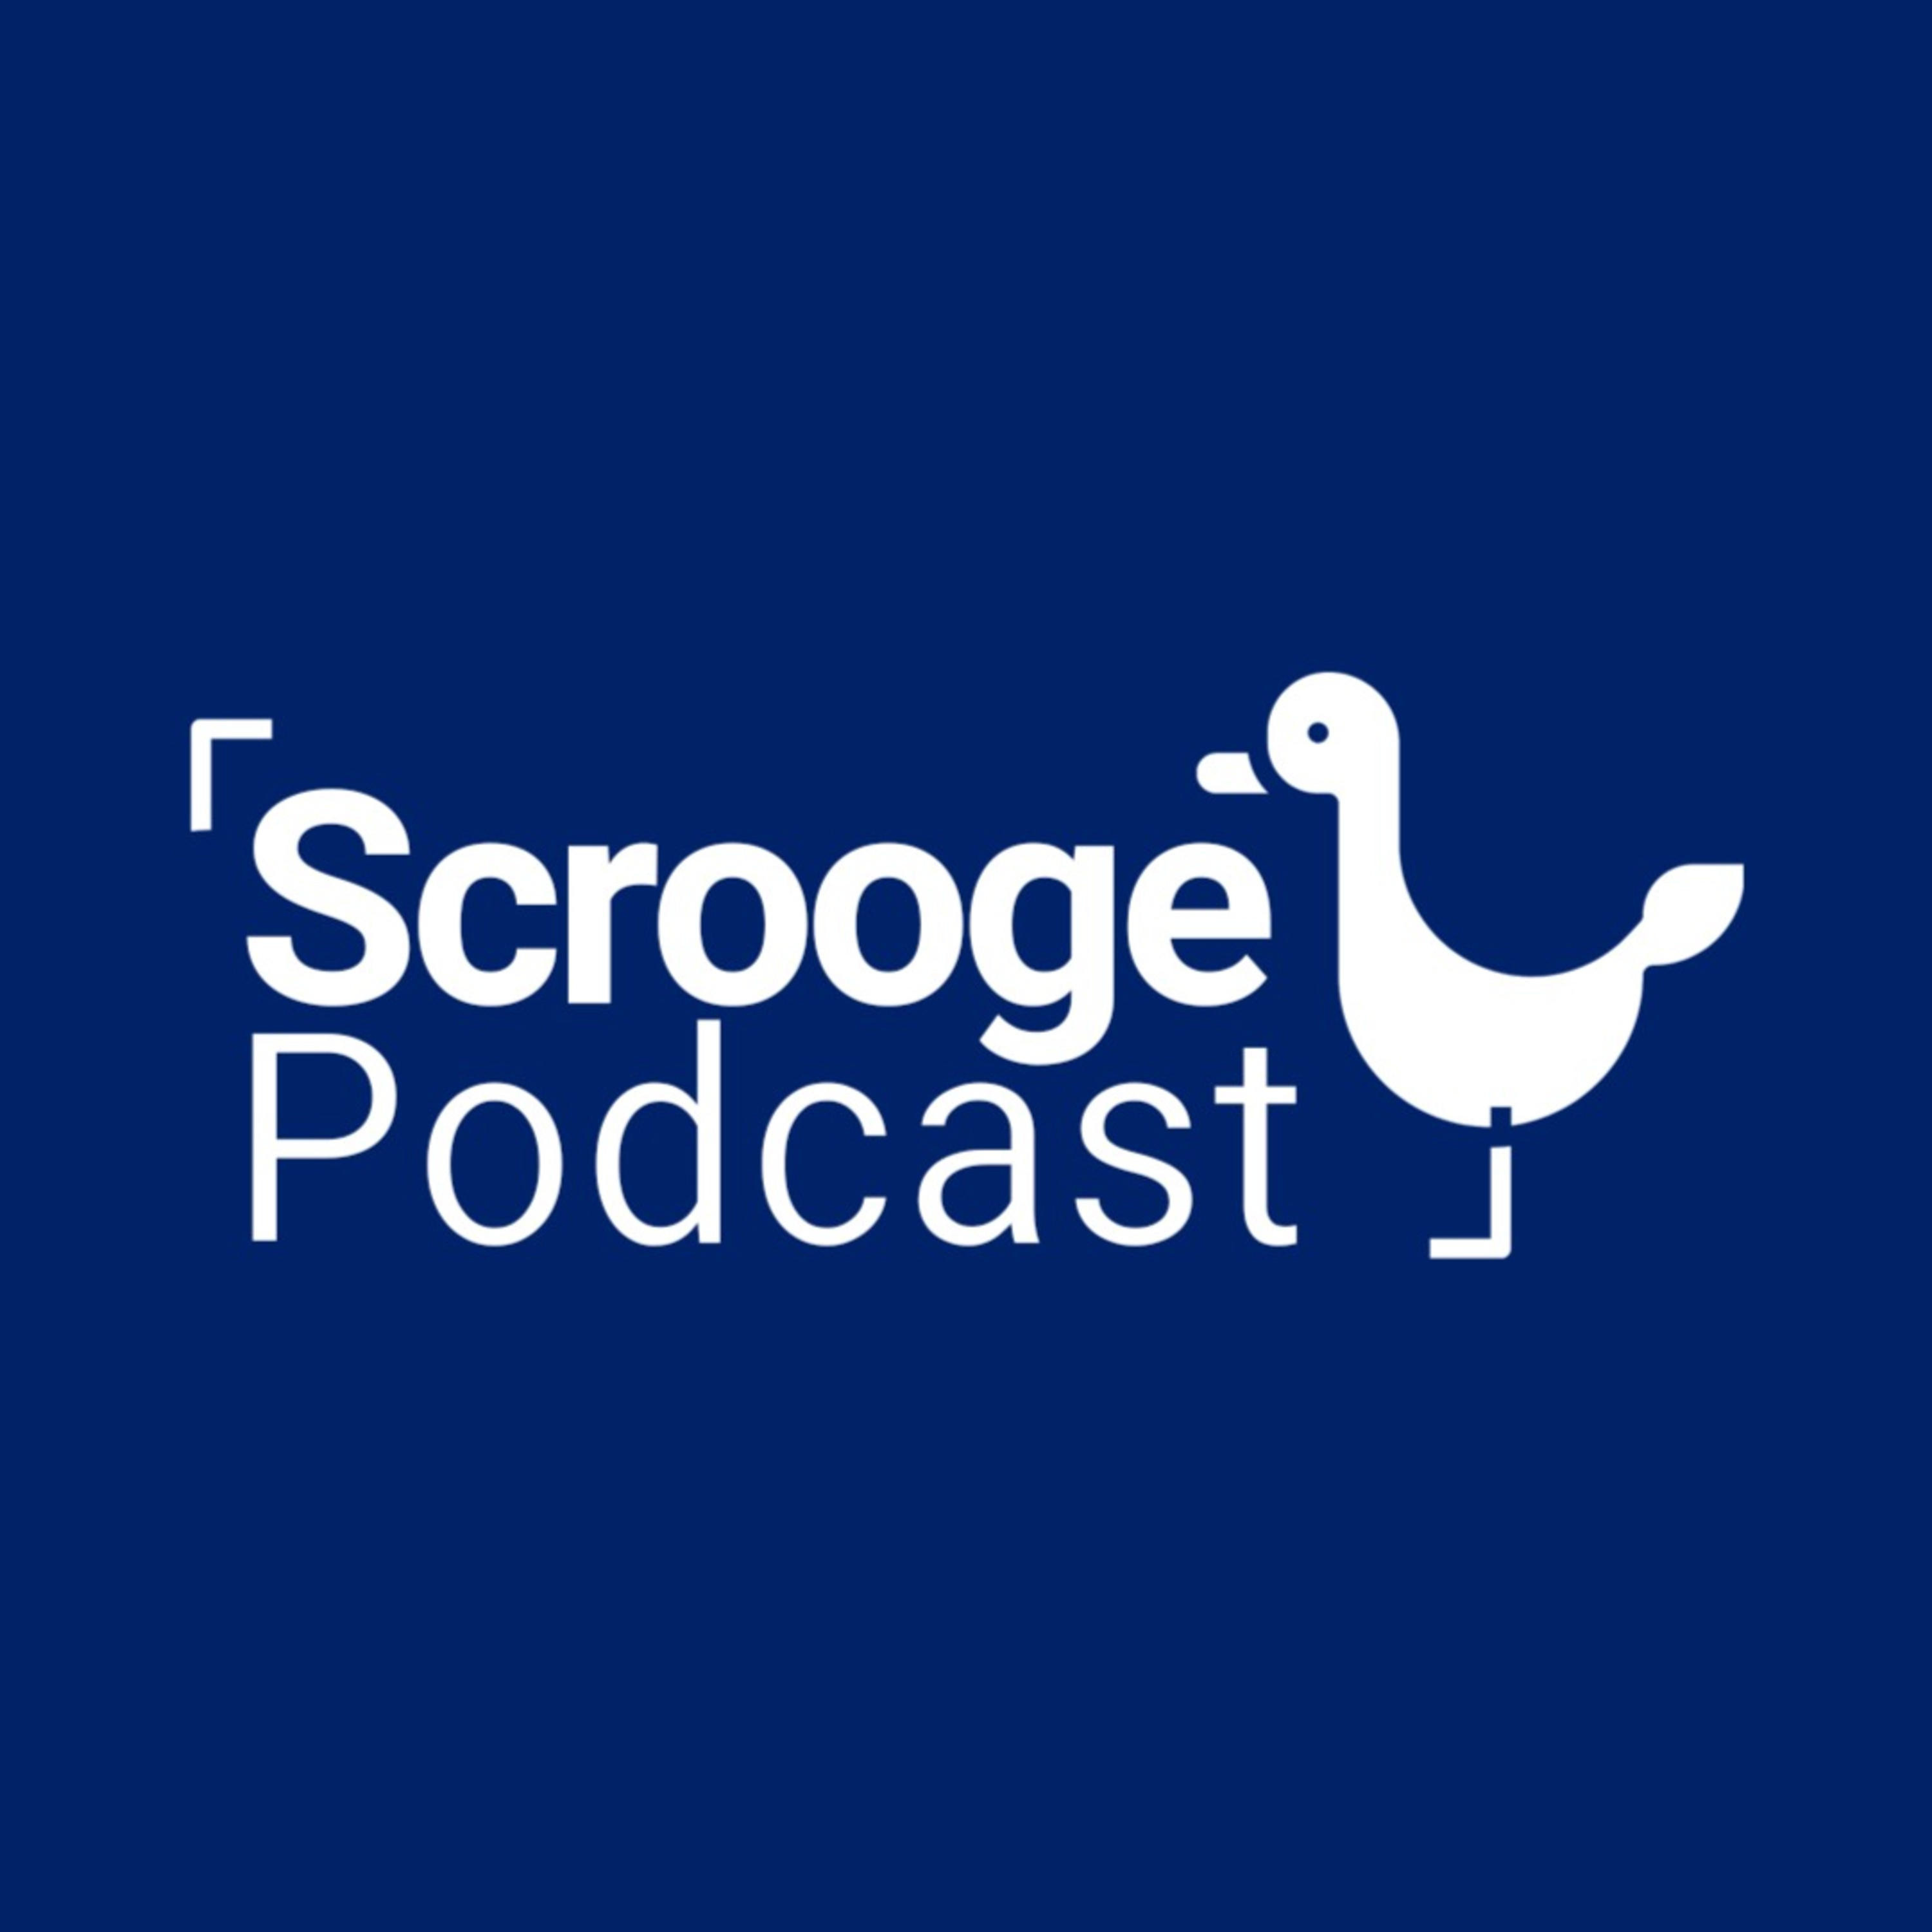 Scrooge Podcast | اسکروج پادکست:Scrooge